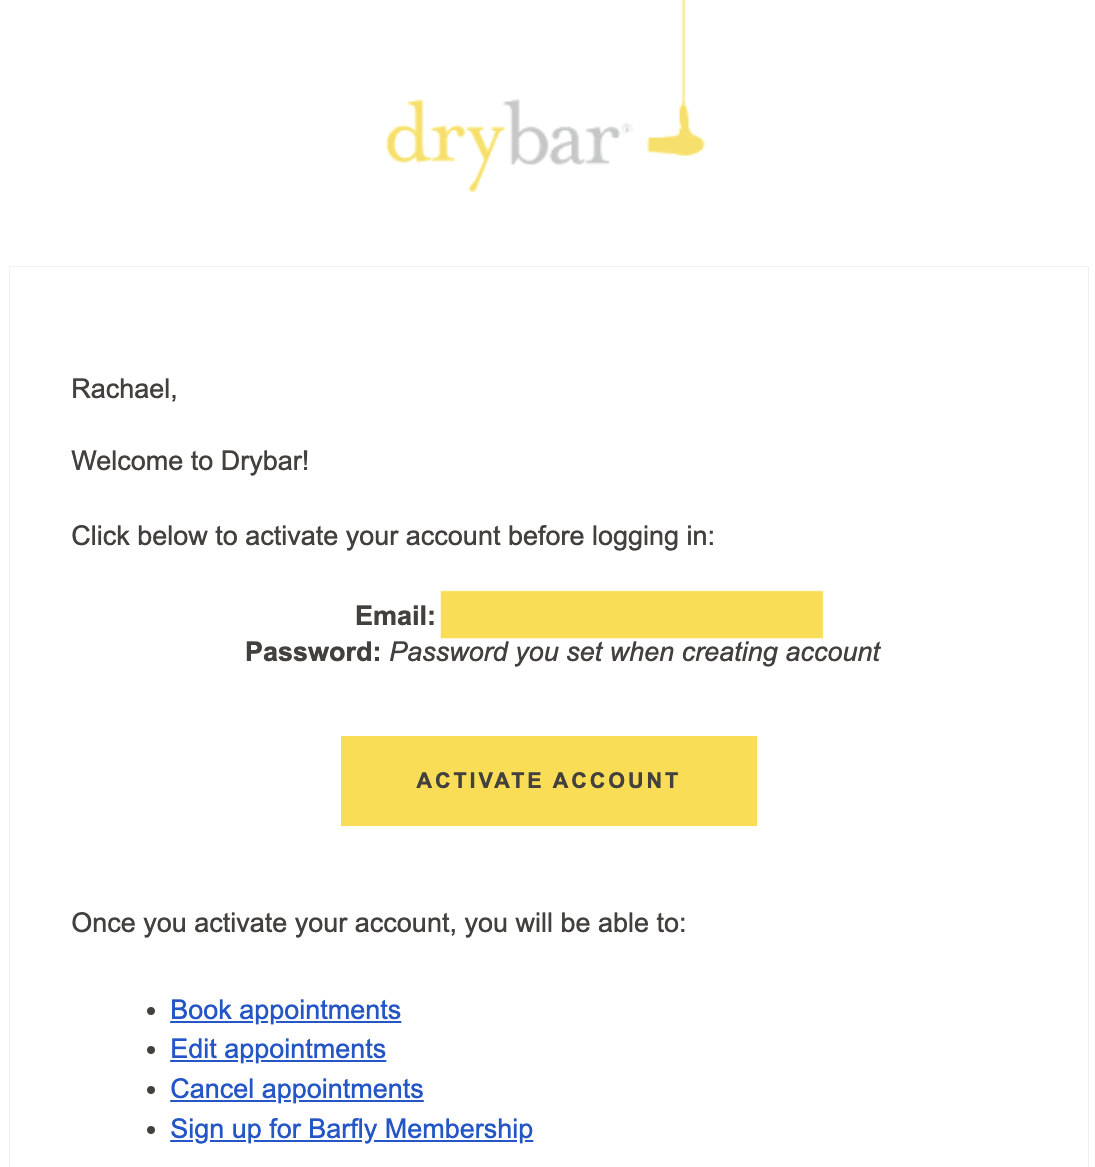 Drybar customer service welcome email